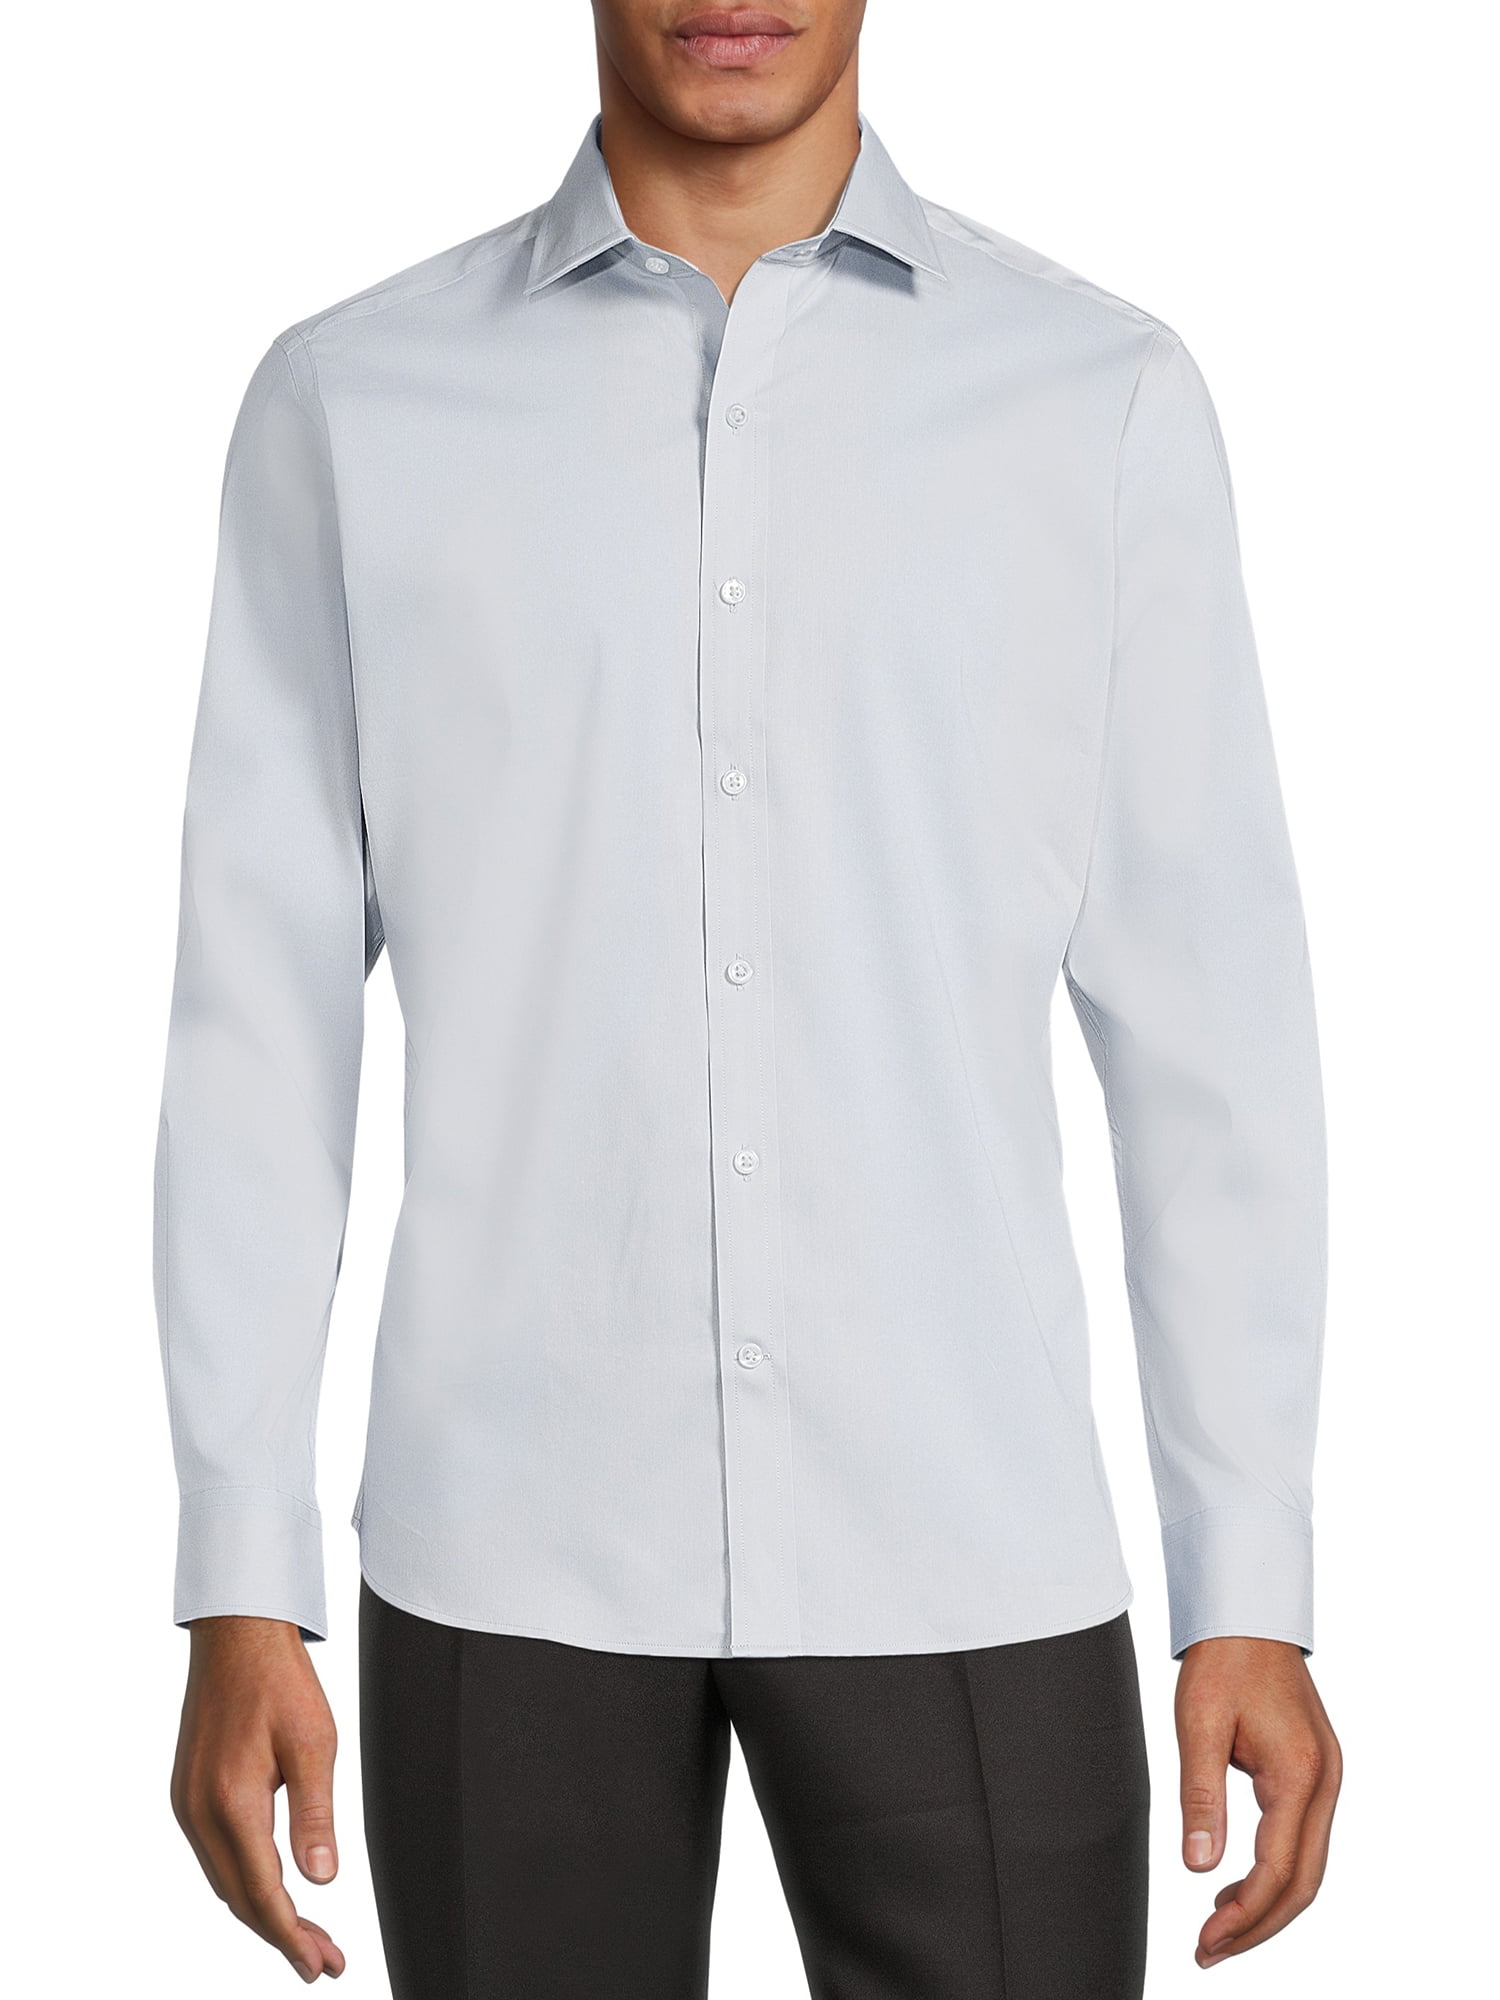 George Men's Slim Fit Dress Shirt - Walmart.com